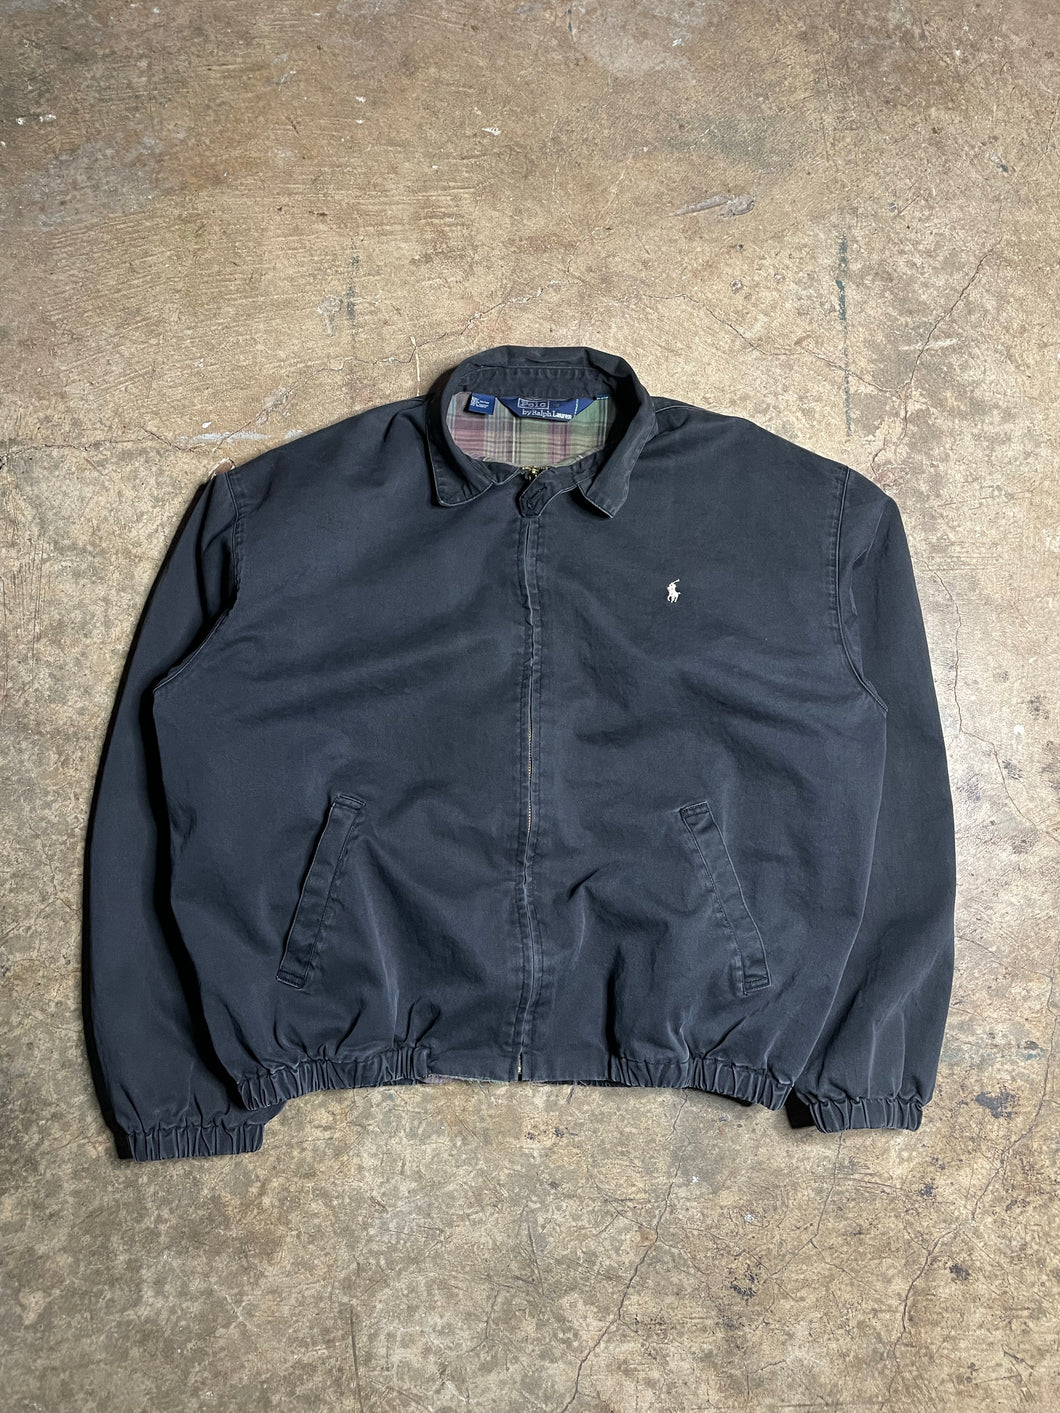 90’s Polo Flannel lined Harrington Jacket - L